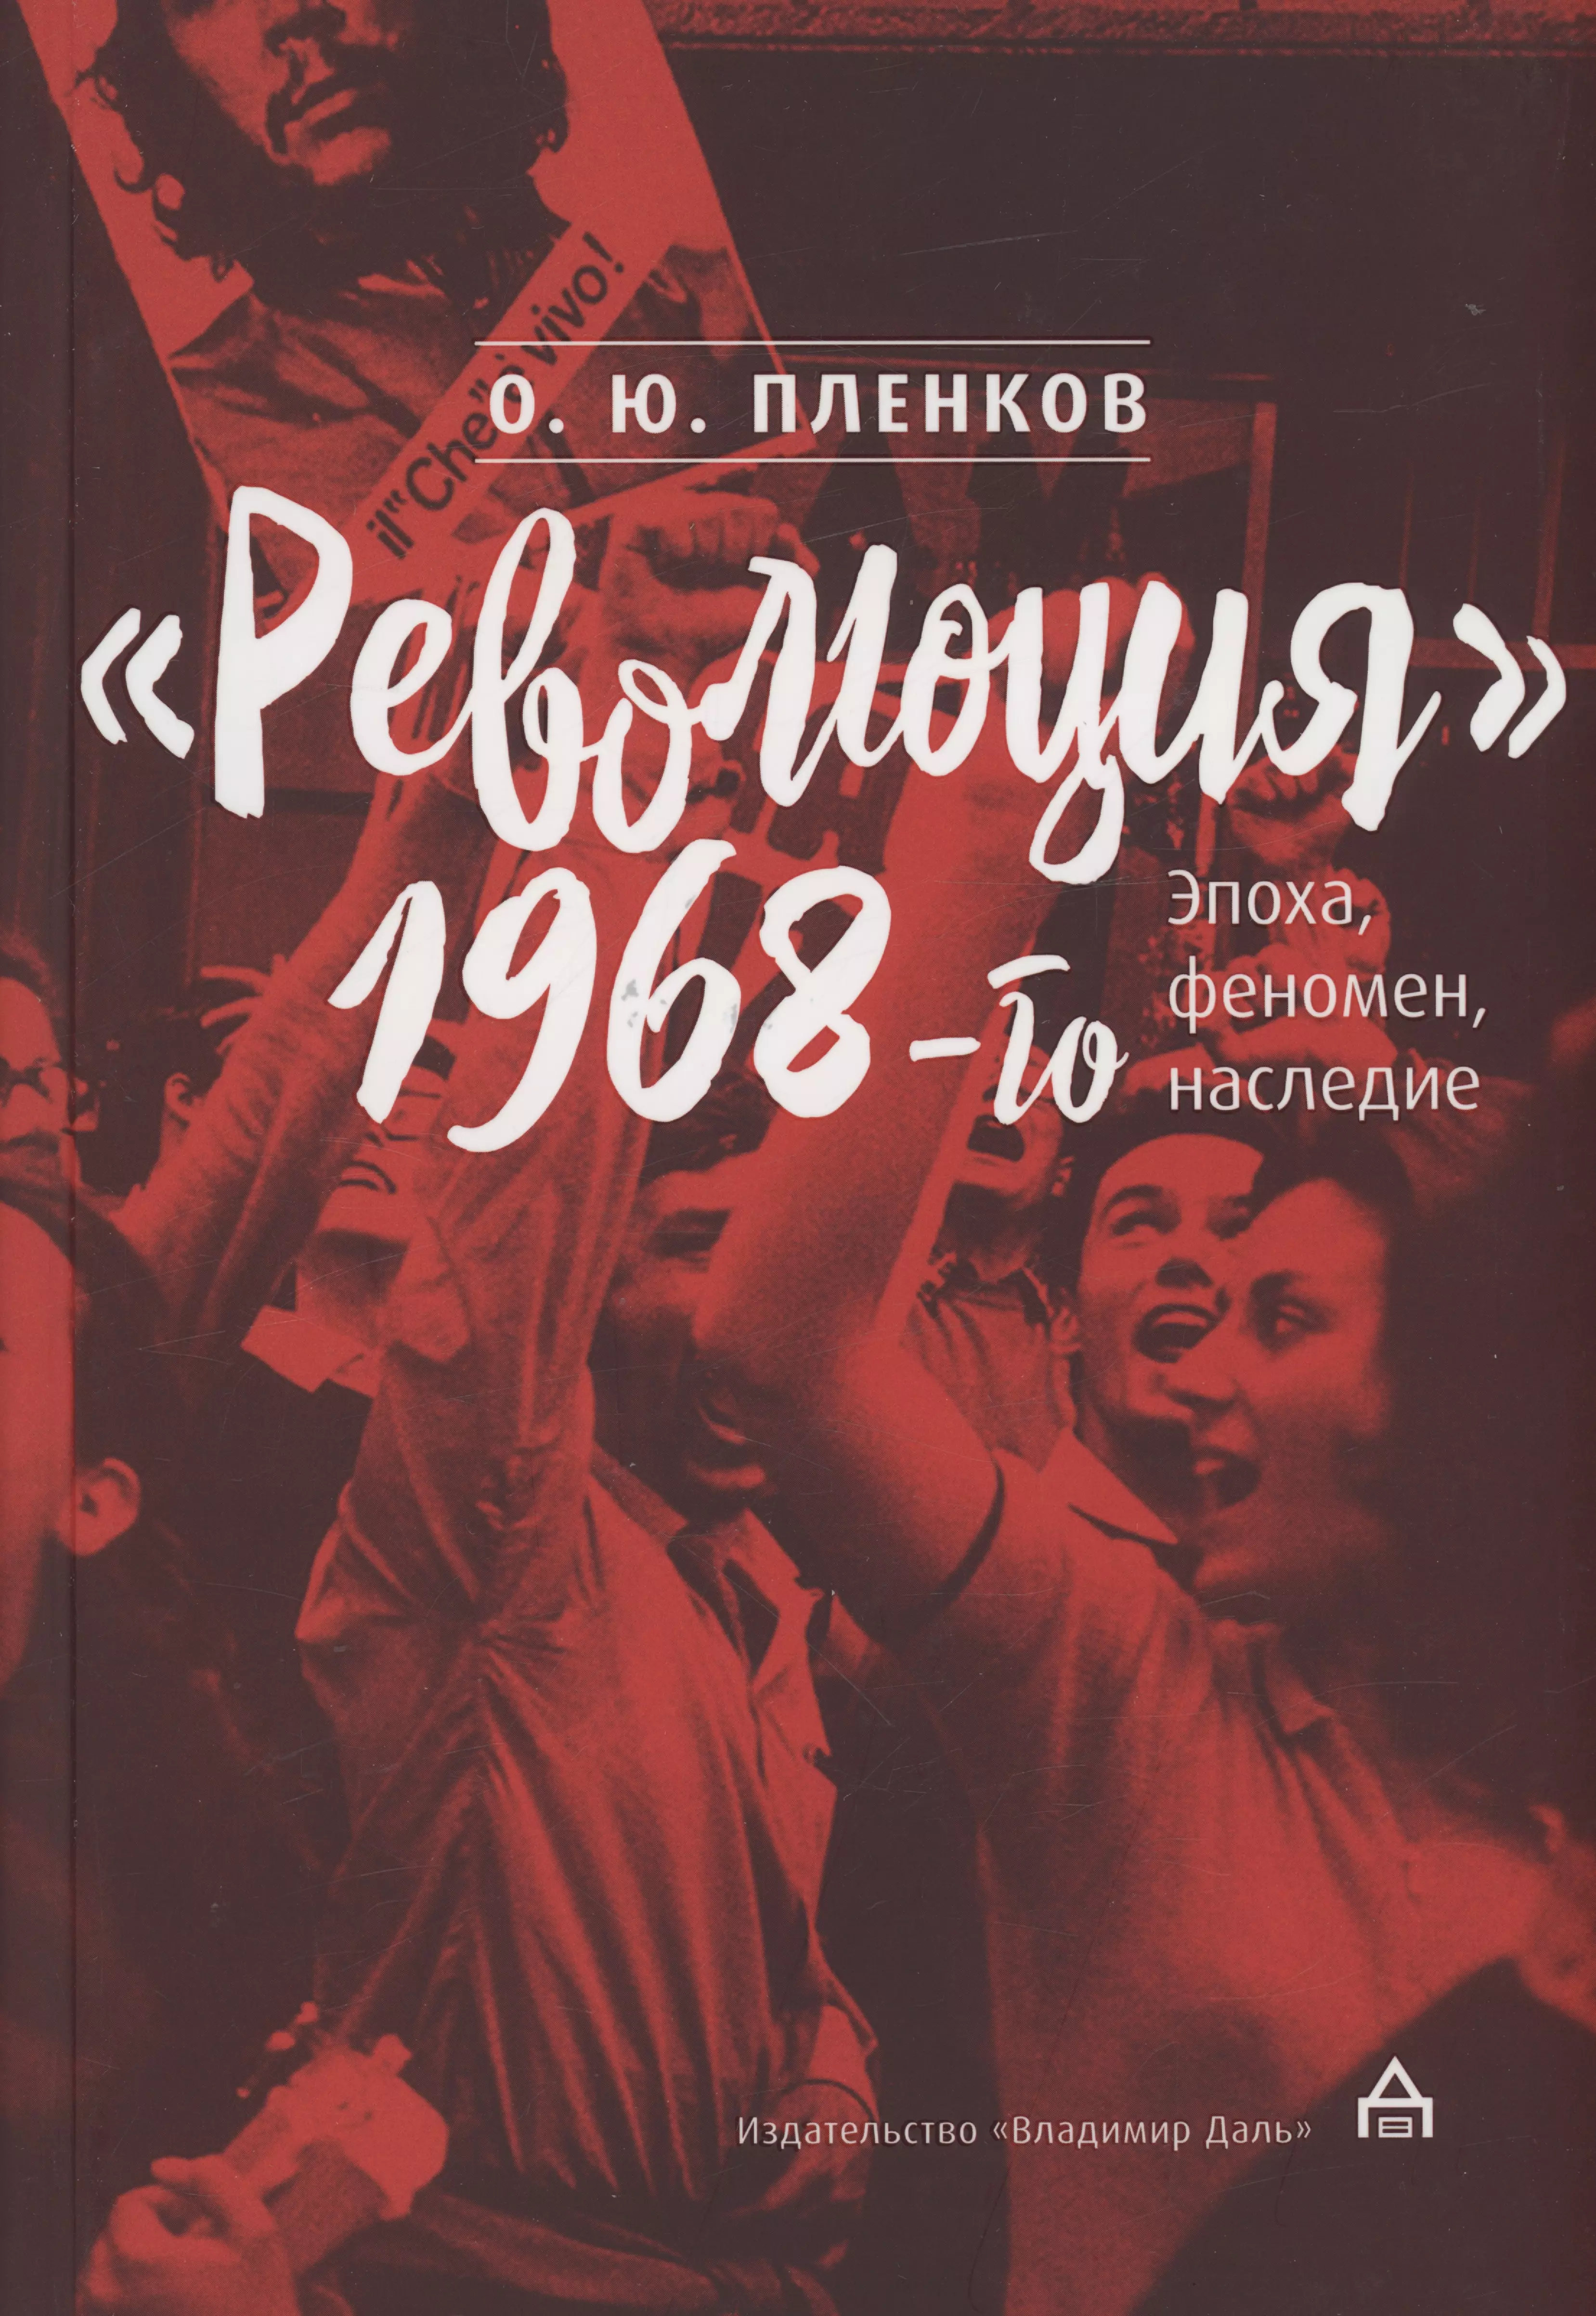 Пленков Олег Юрьевич - "Революция" 1968-го: эпоха, феномен, наследие